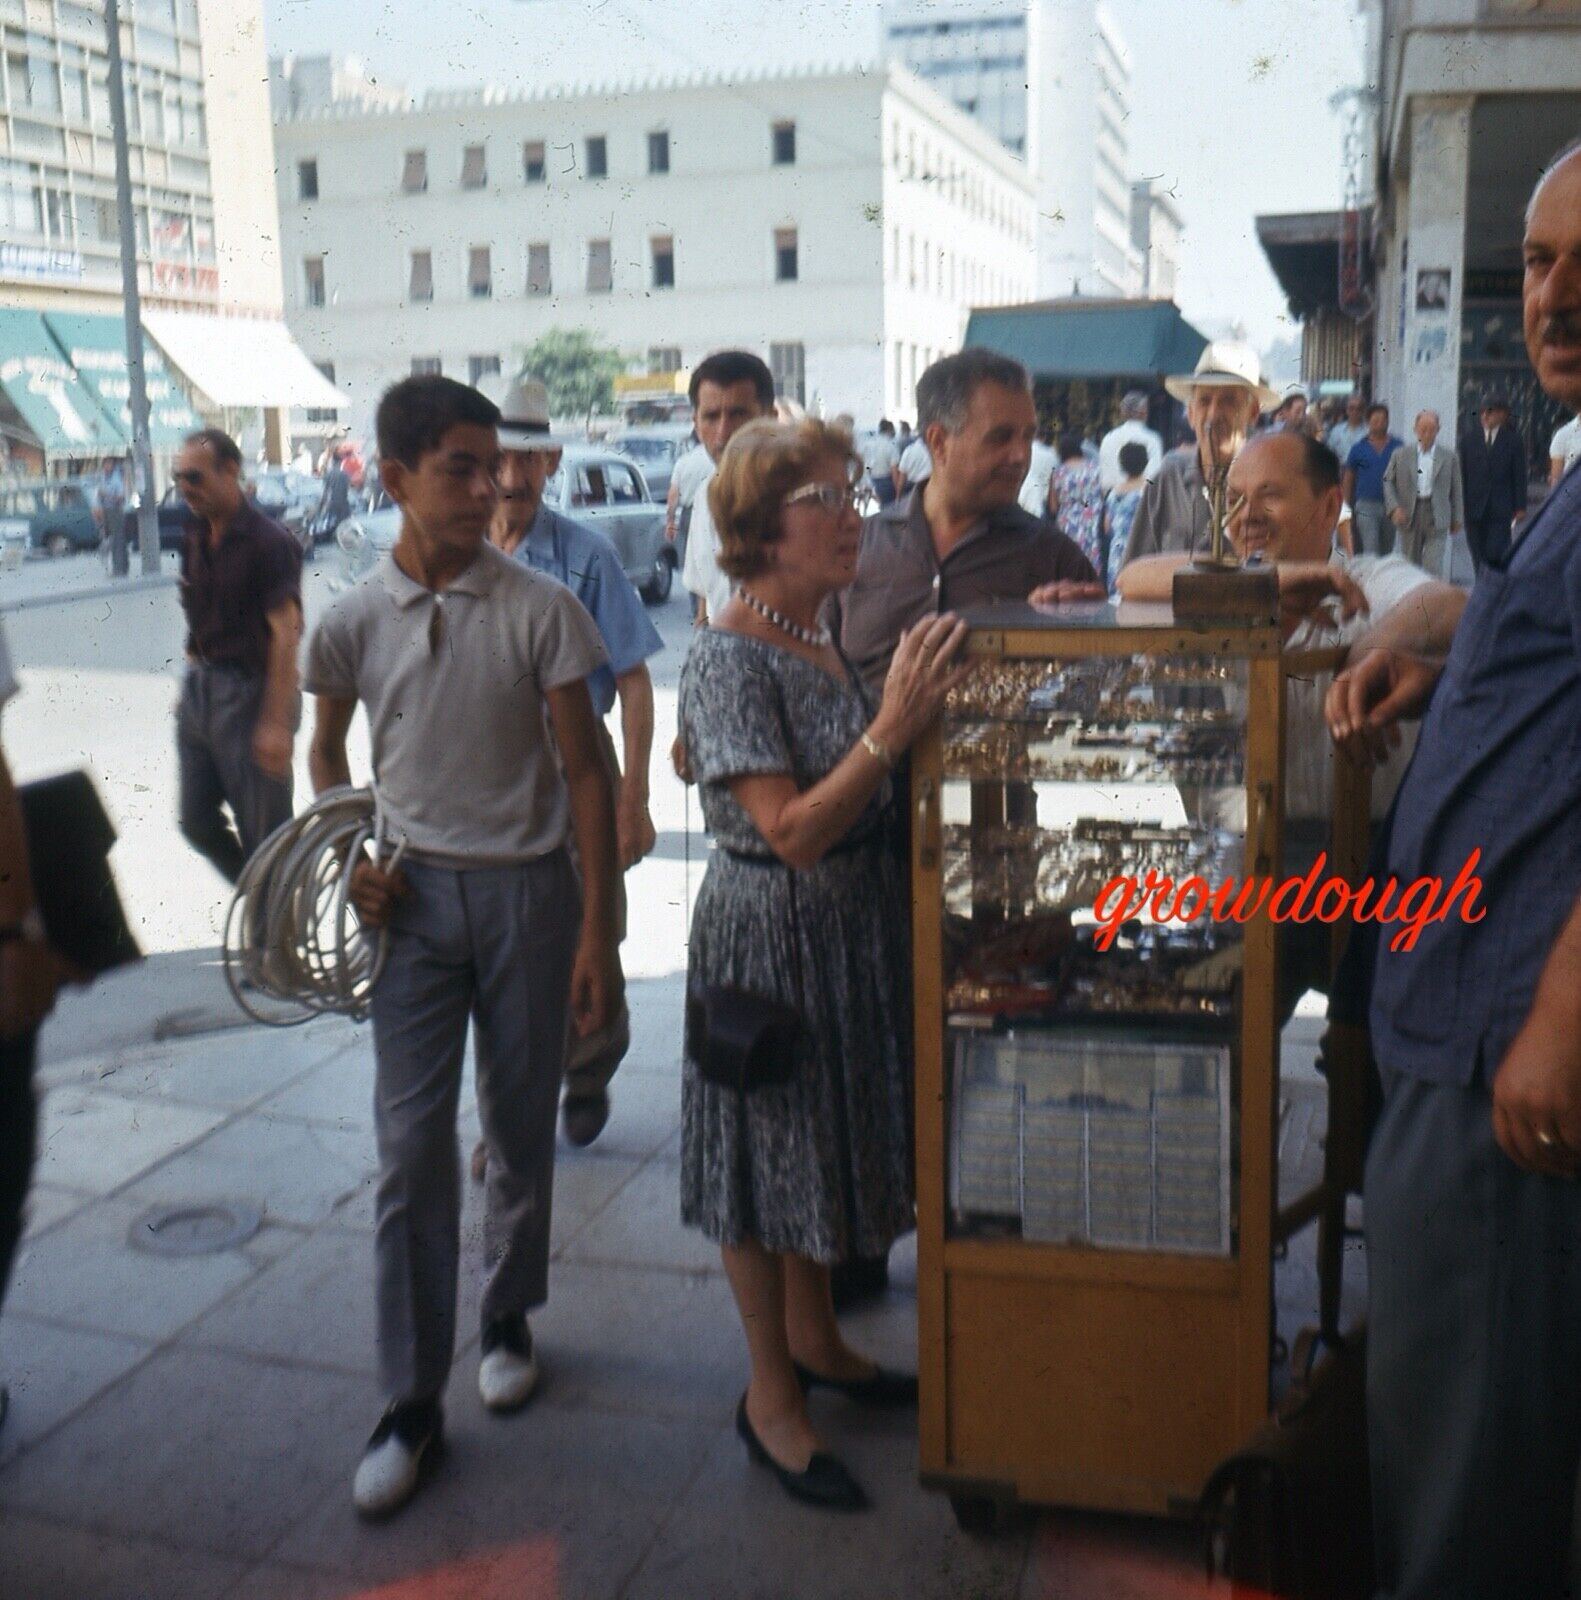 Original Athens Street Scenes Cars Stores Ads Photo Slides 1964